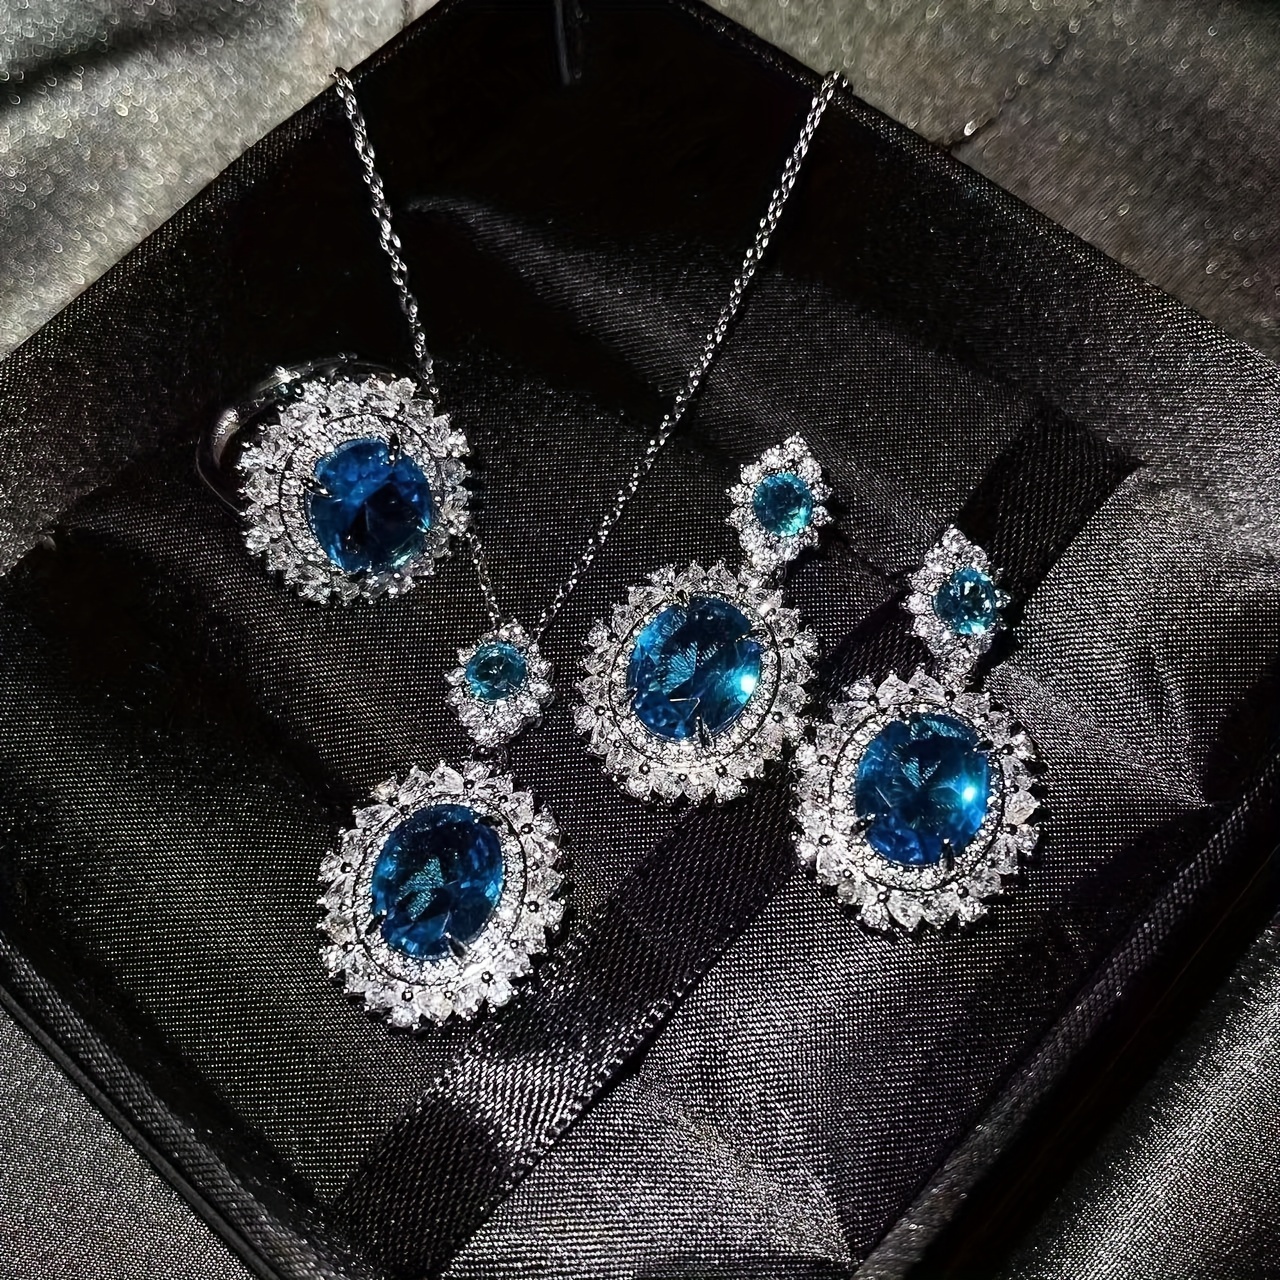 

Luxury Crystal Jewelry Set, Sparkling Pinkish Faux Diamond Necklace, Ring, And Earrings, Glamorous Style, Elegant 3-piece Ensemble